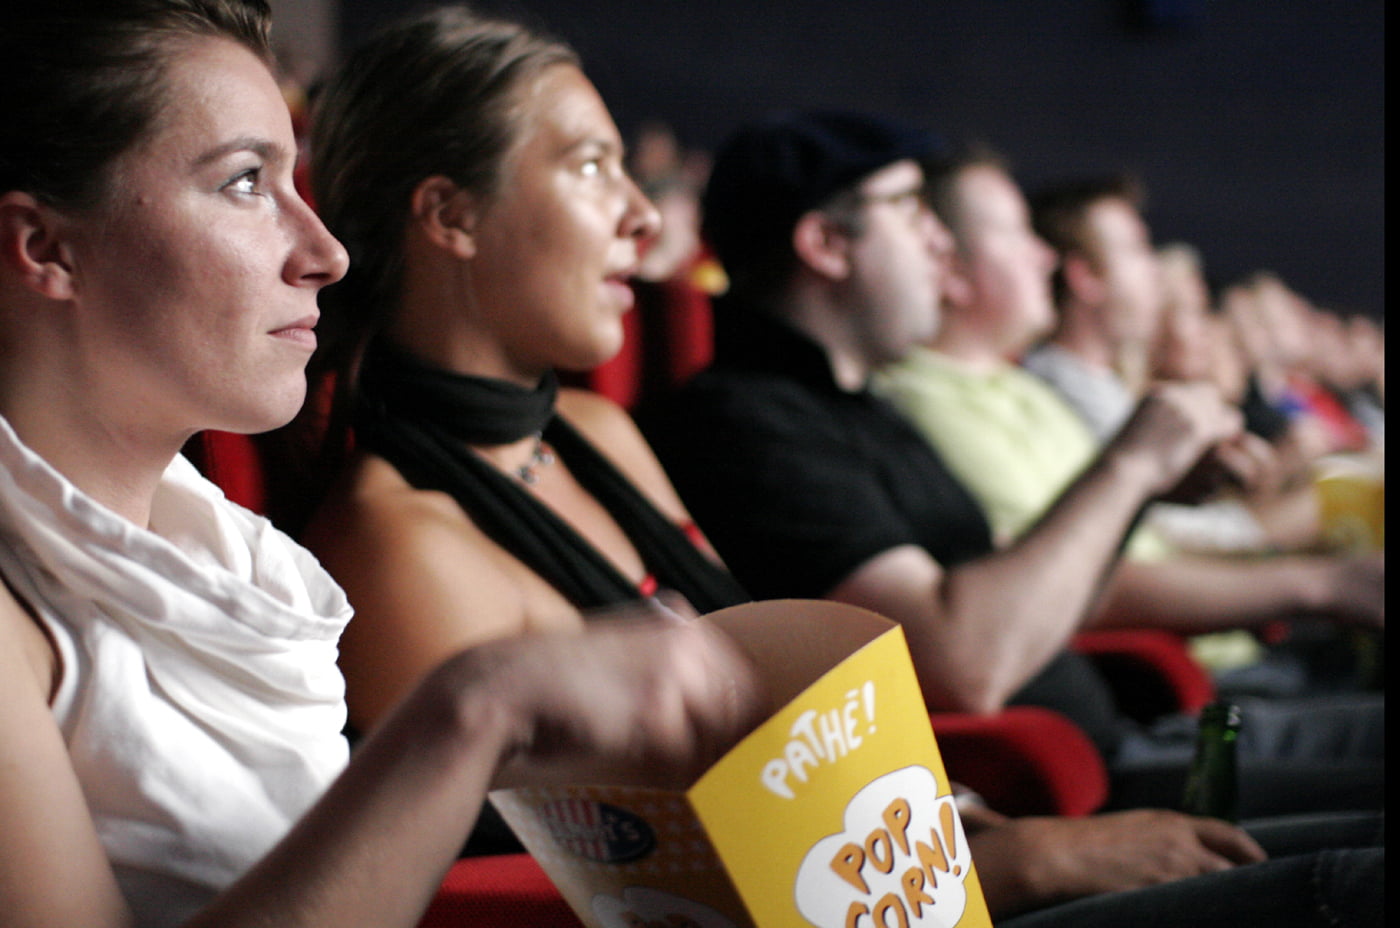 people watching film at the cinema eating popcorn